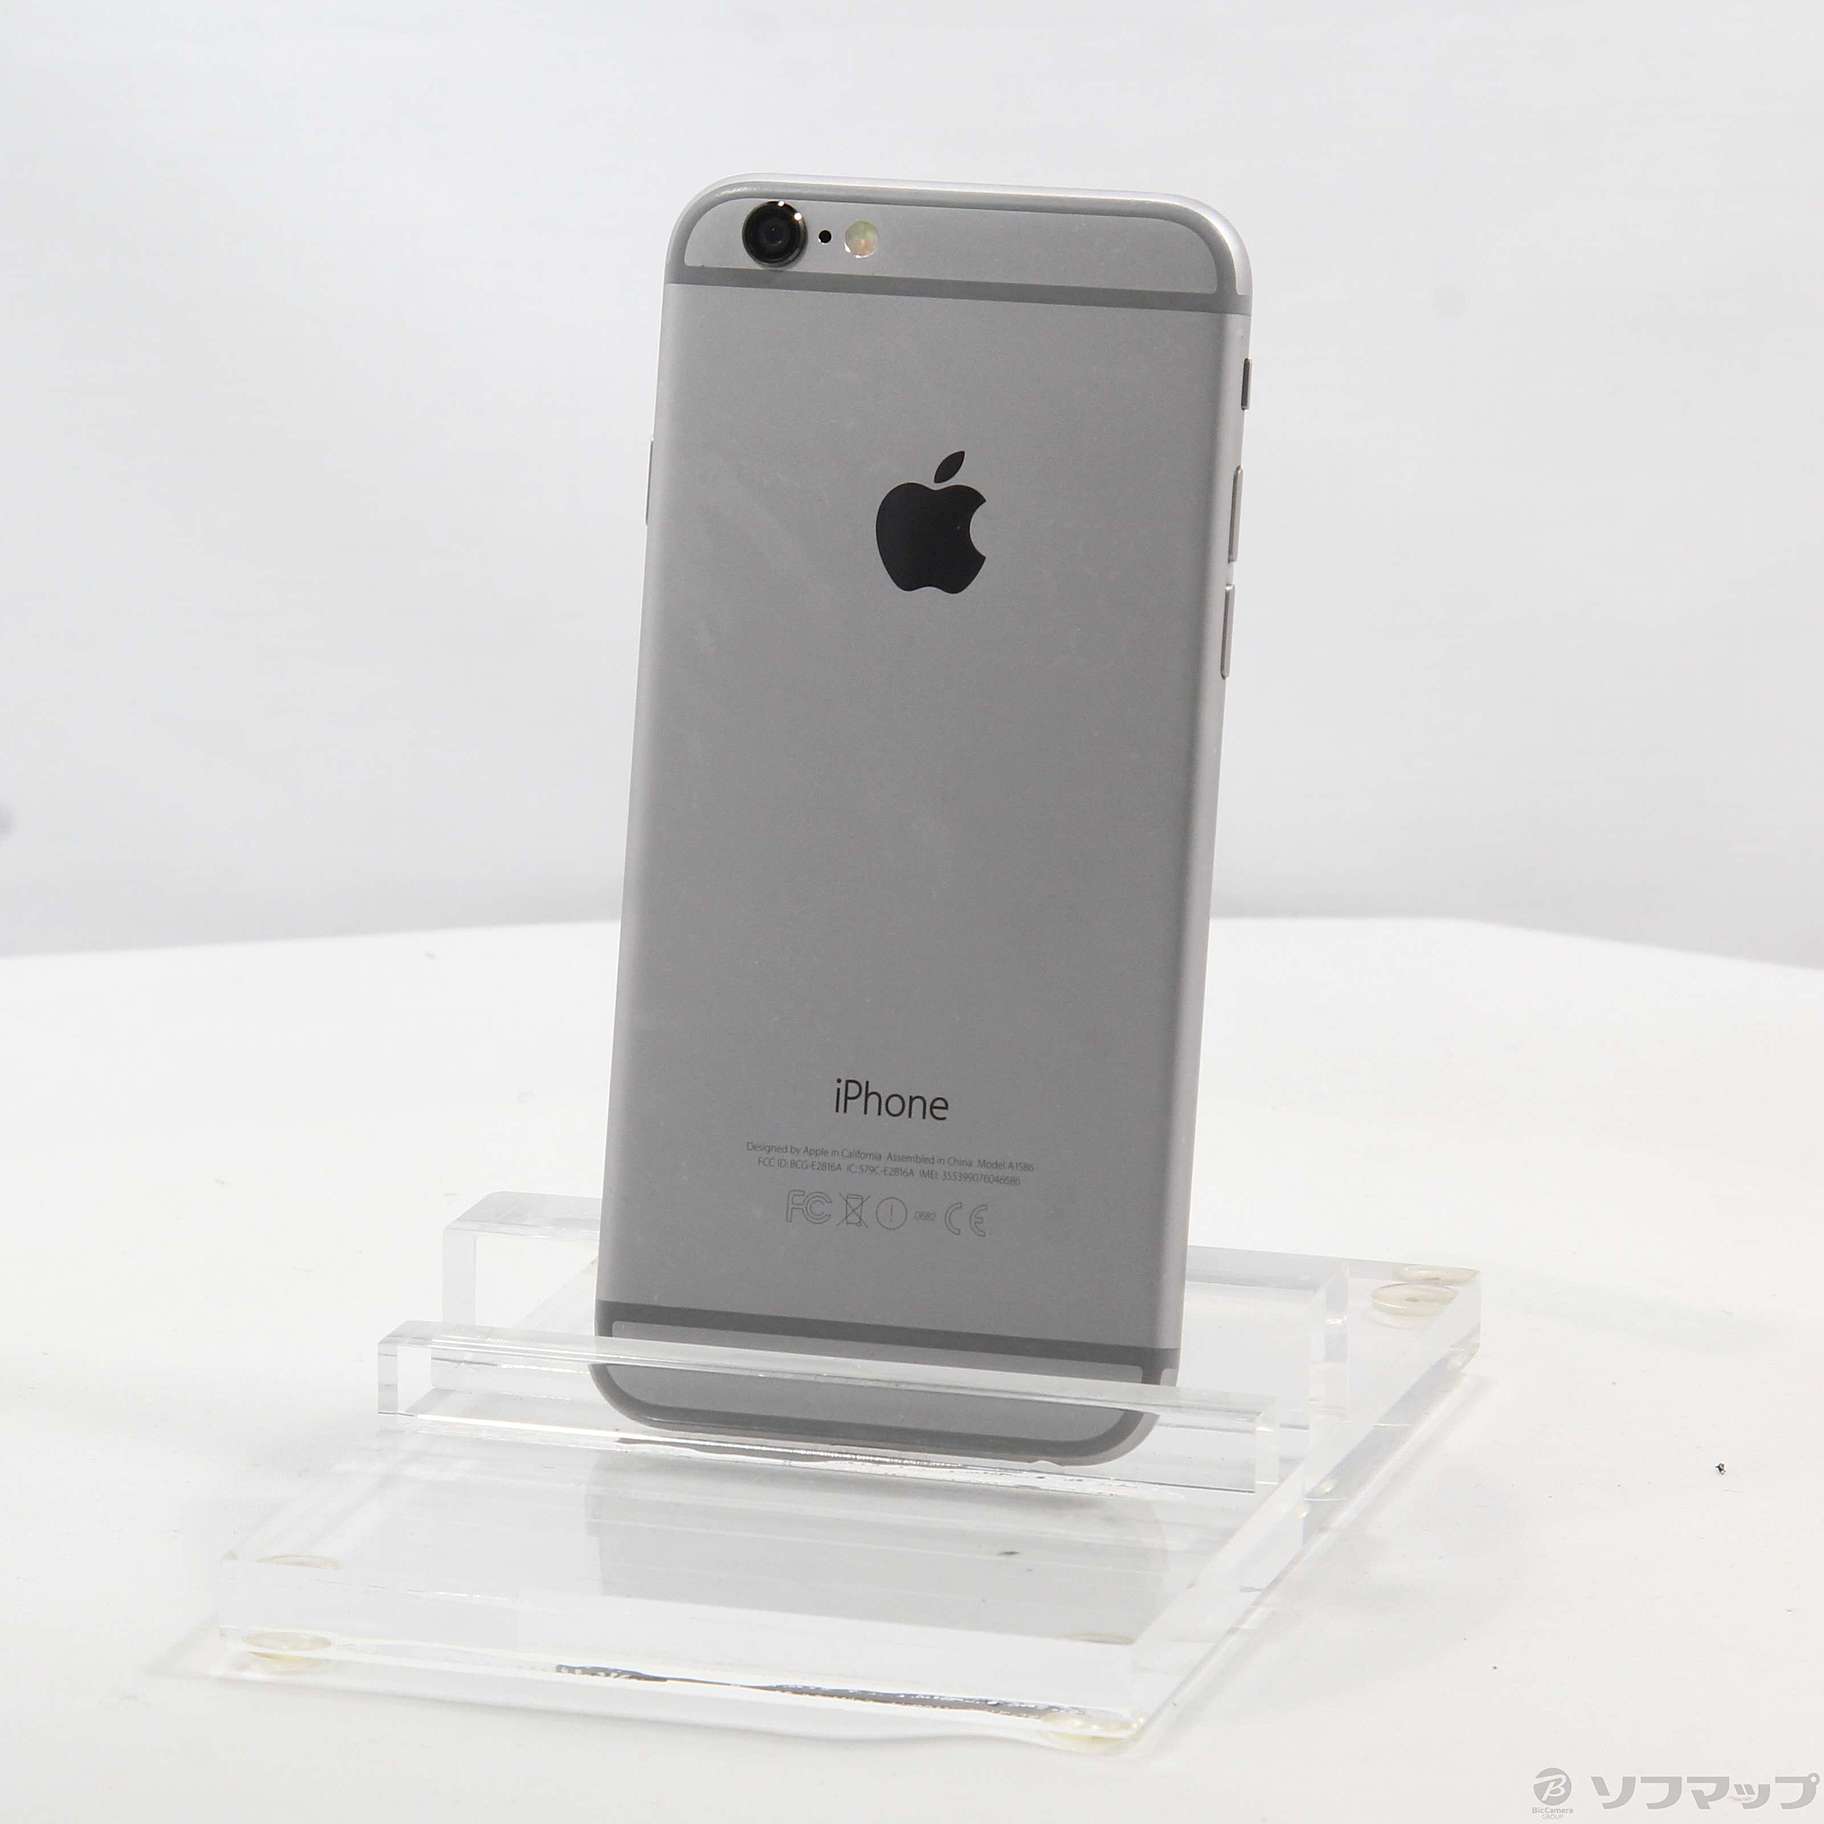 iPhone 6 Space Gray 128 GB Softbank - スマートフォン本体